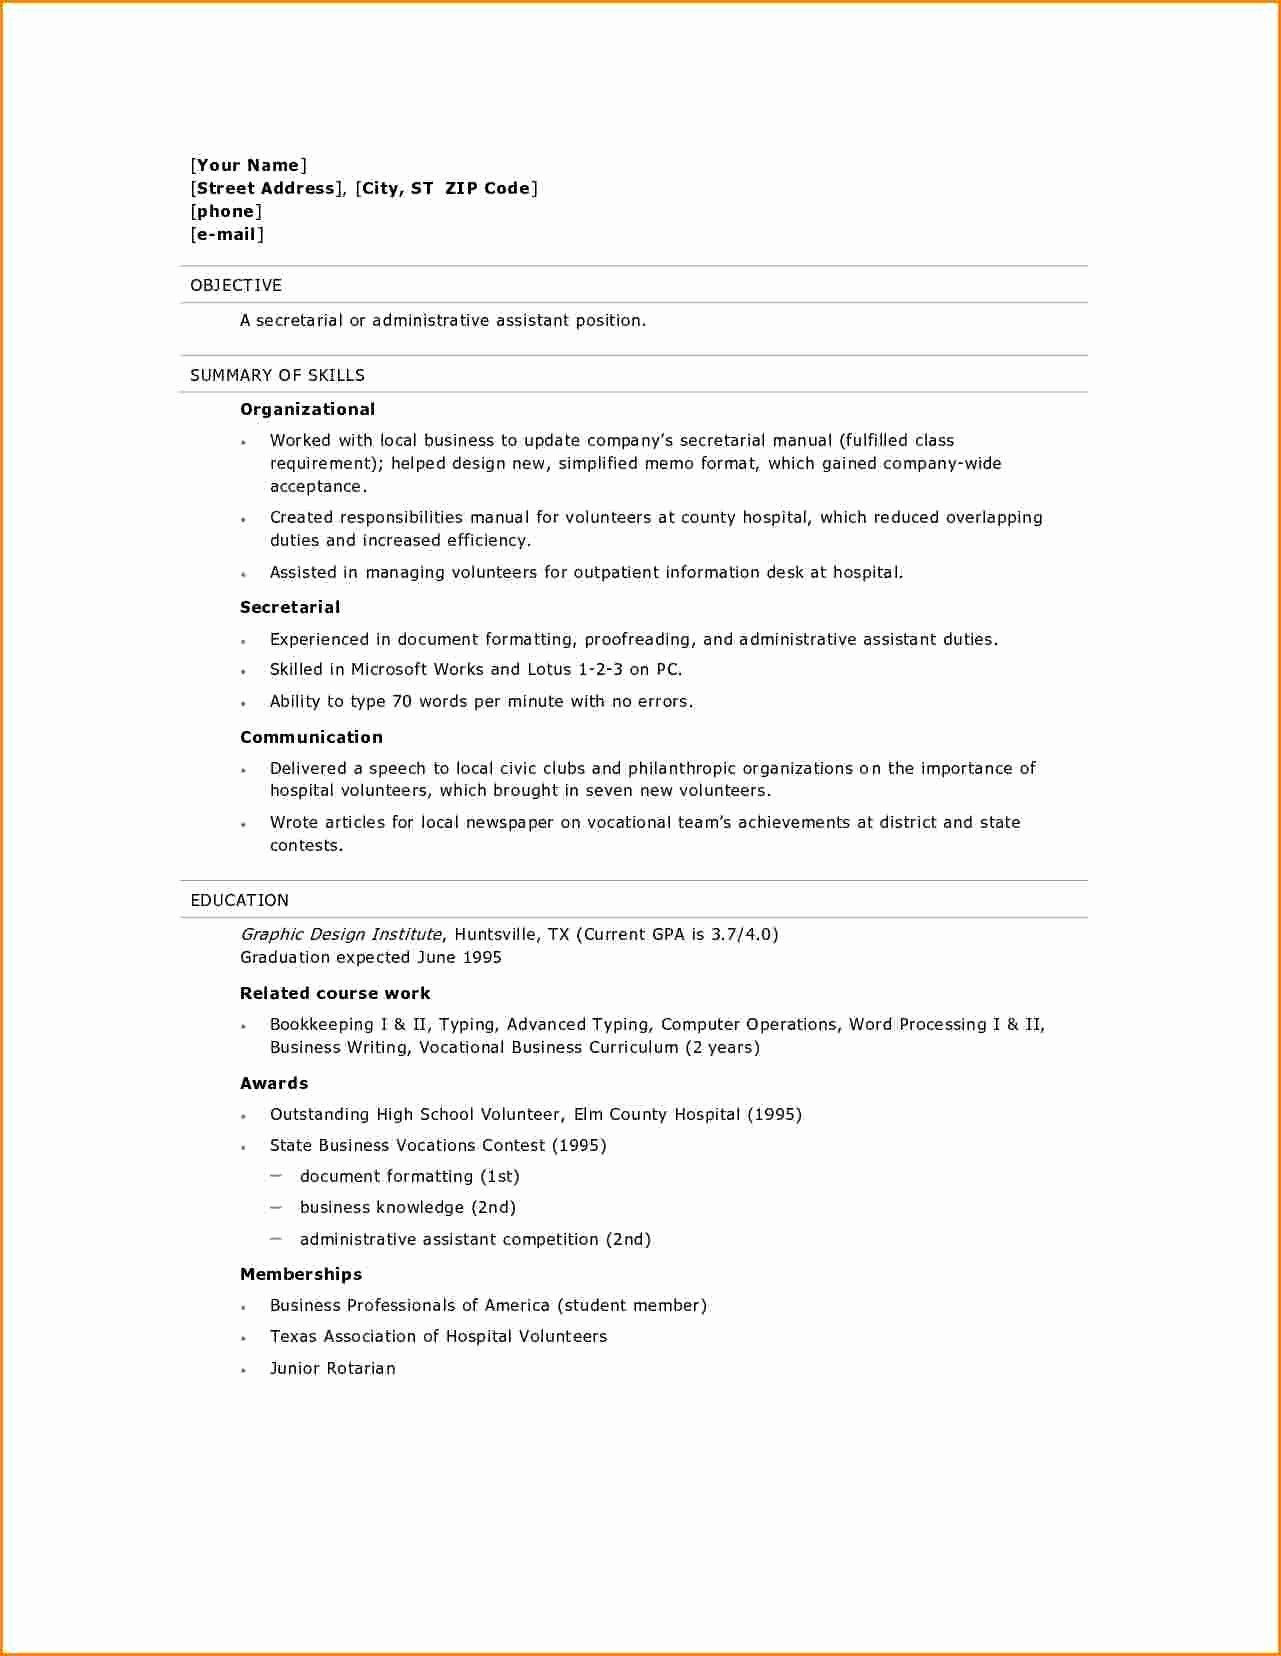 Sample Resume Fresh High School Graduates Resume format High School Graduate – Resume format Resume for …